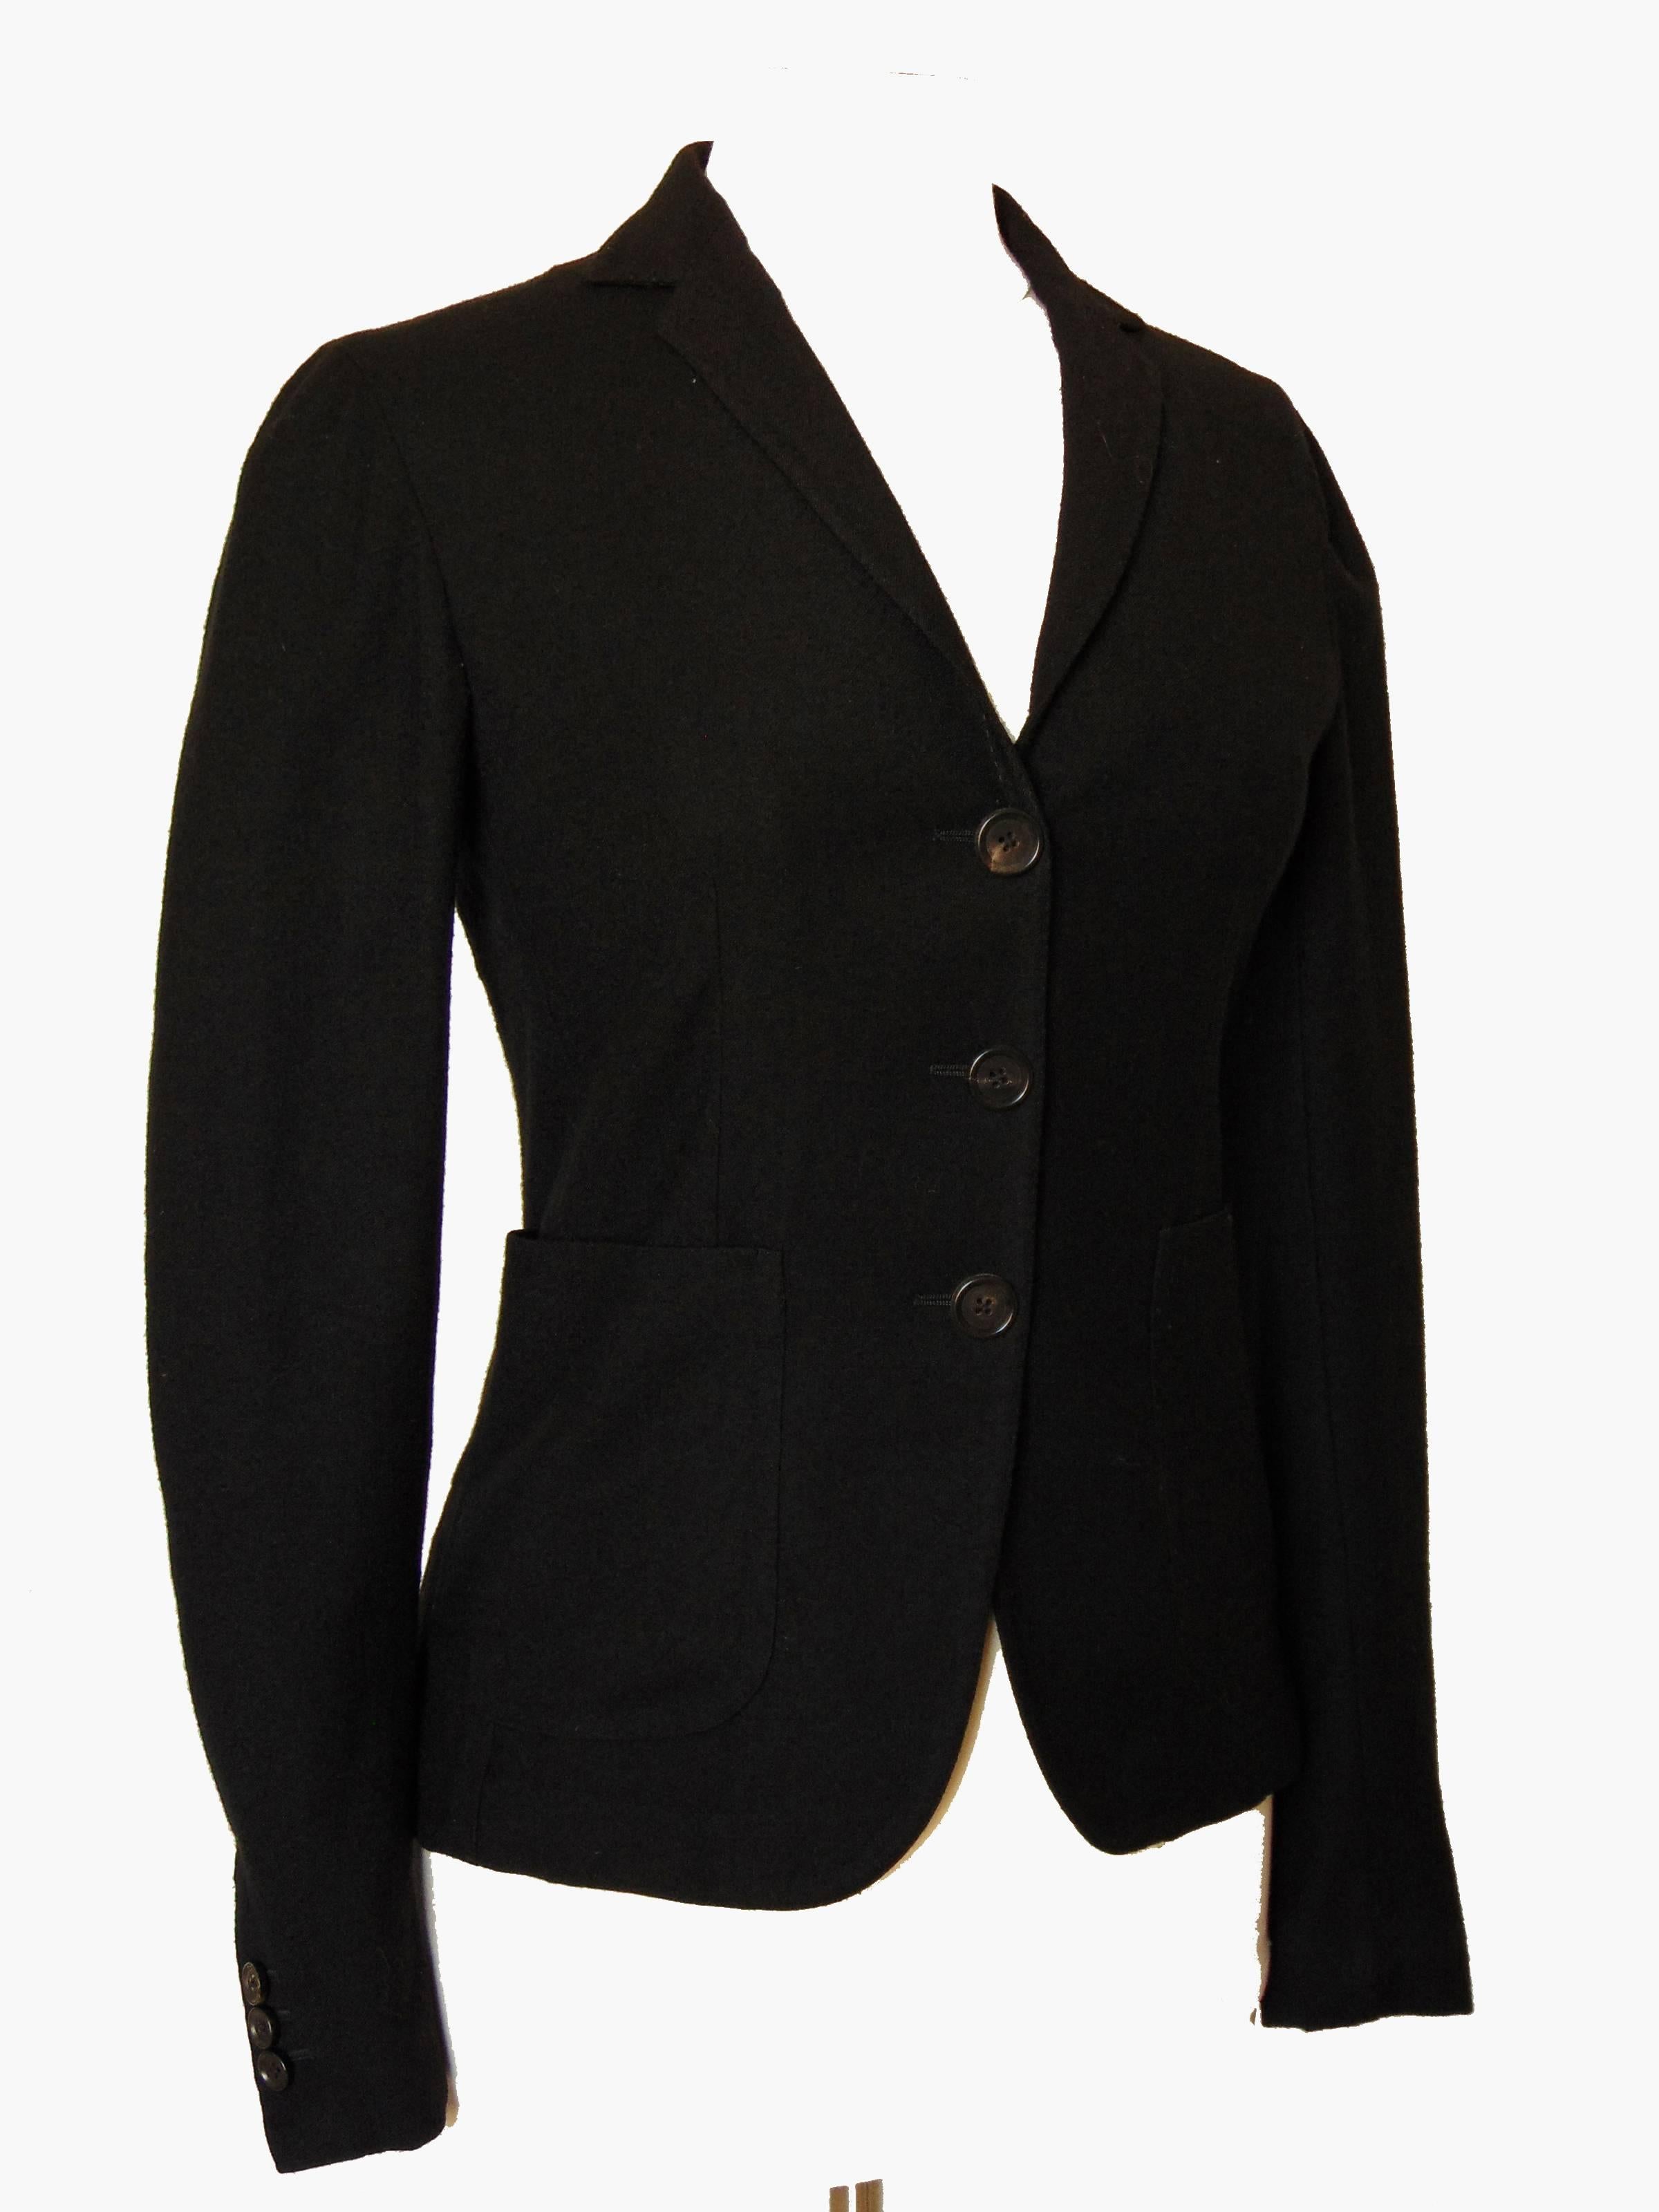 Bottega Veneta Black Wool Jacket Blazer Size 42 Italy 1